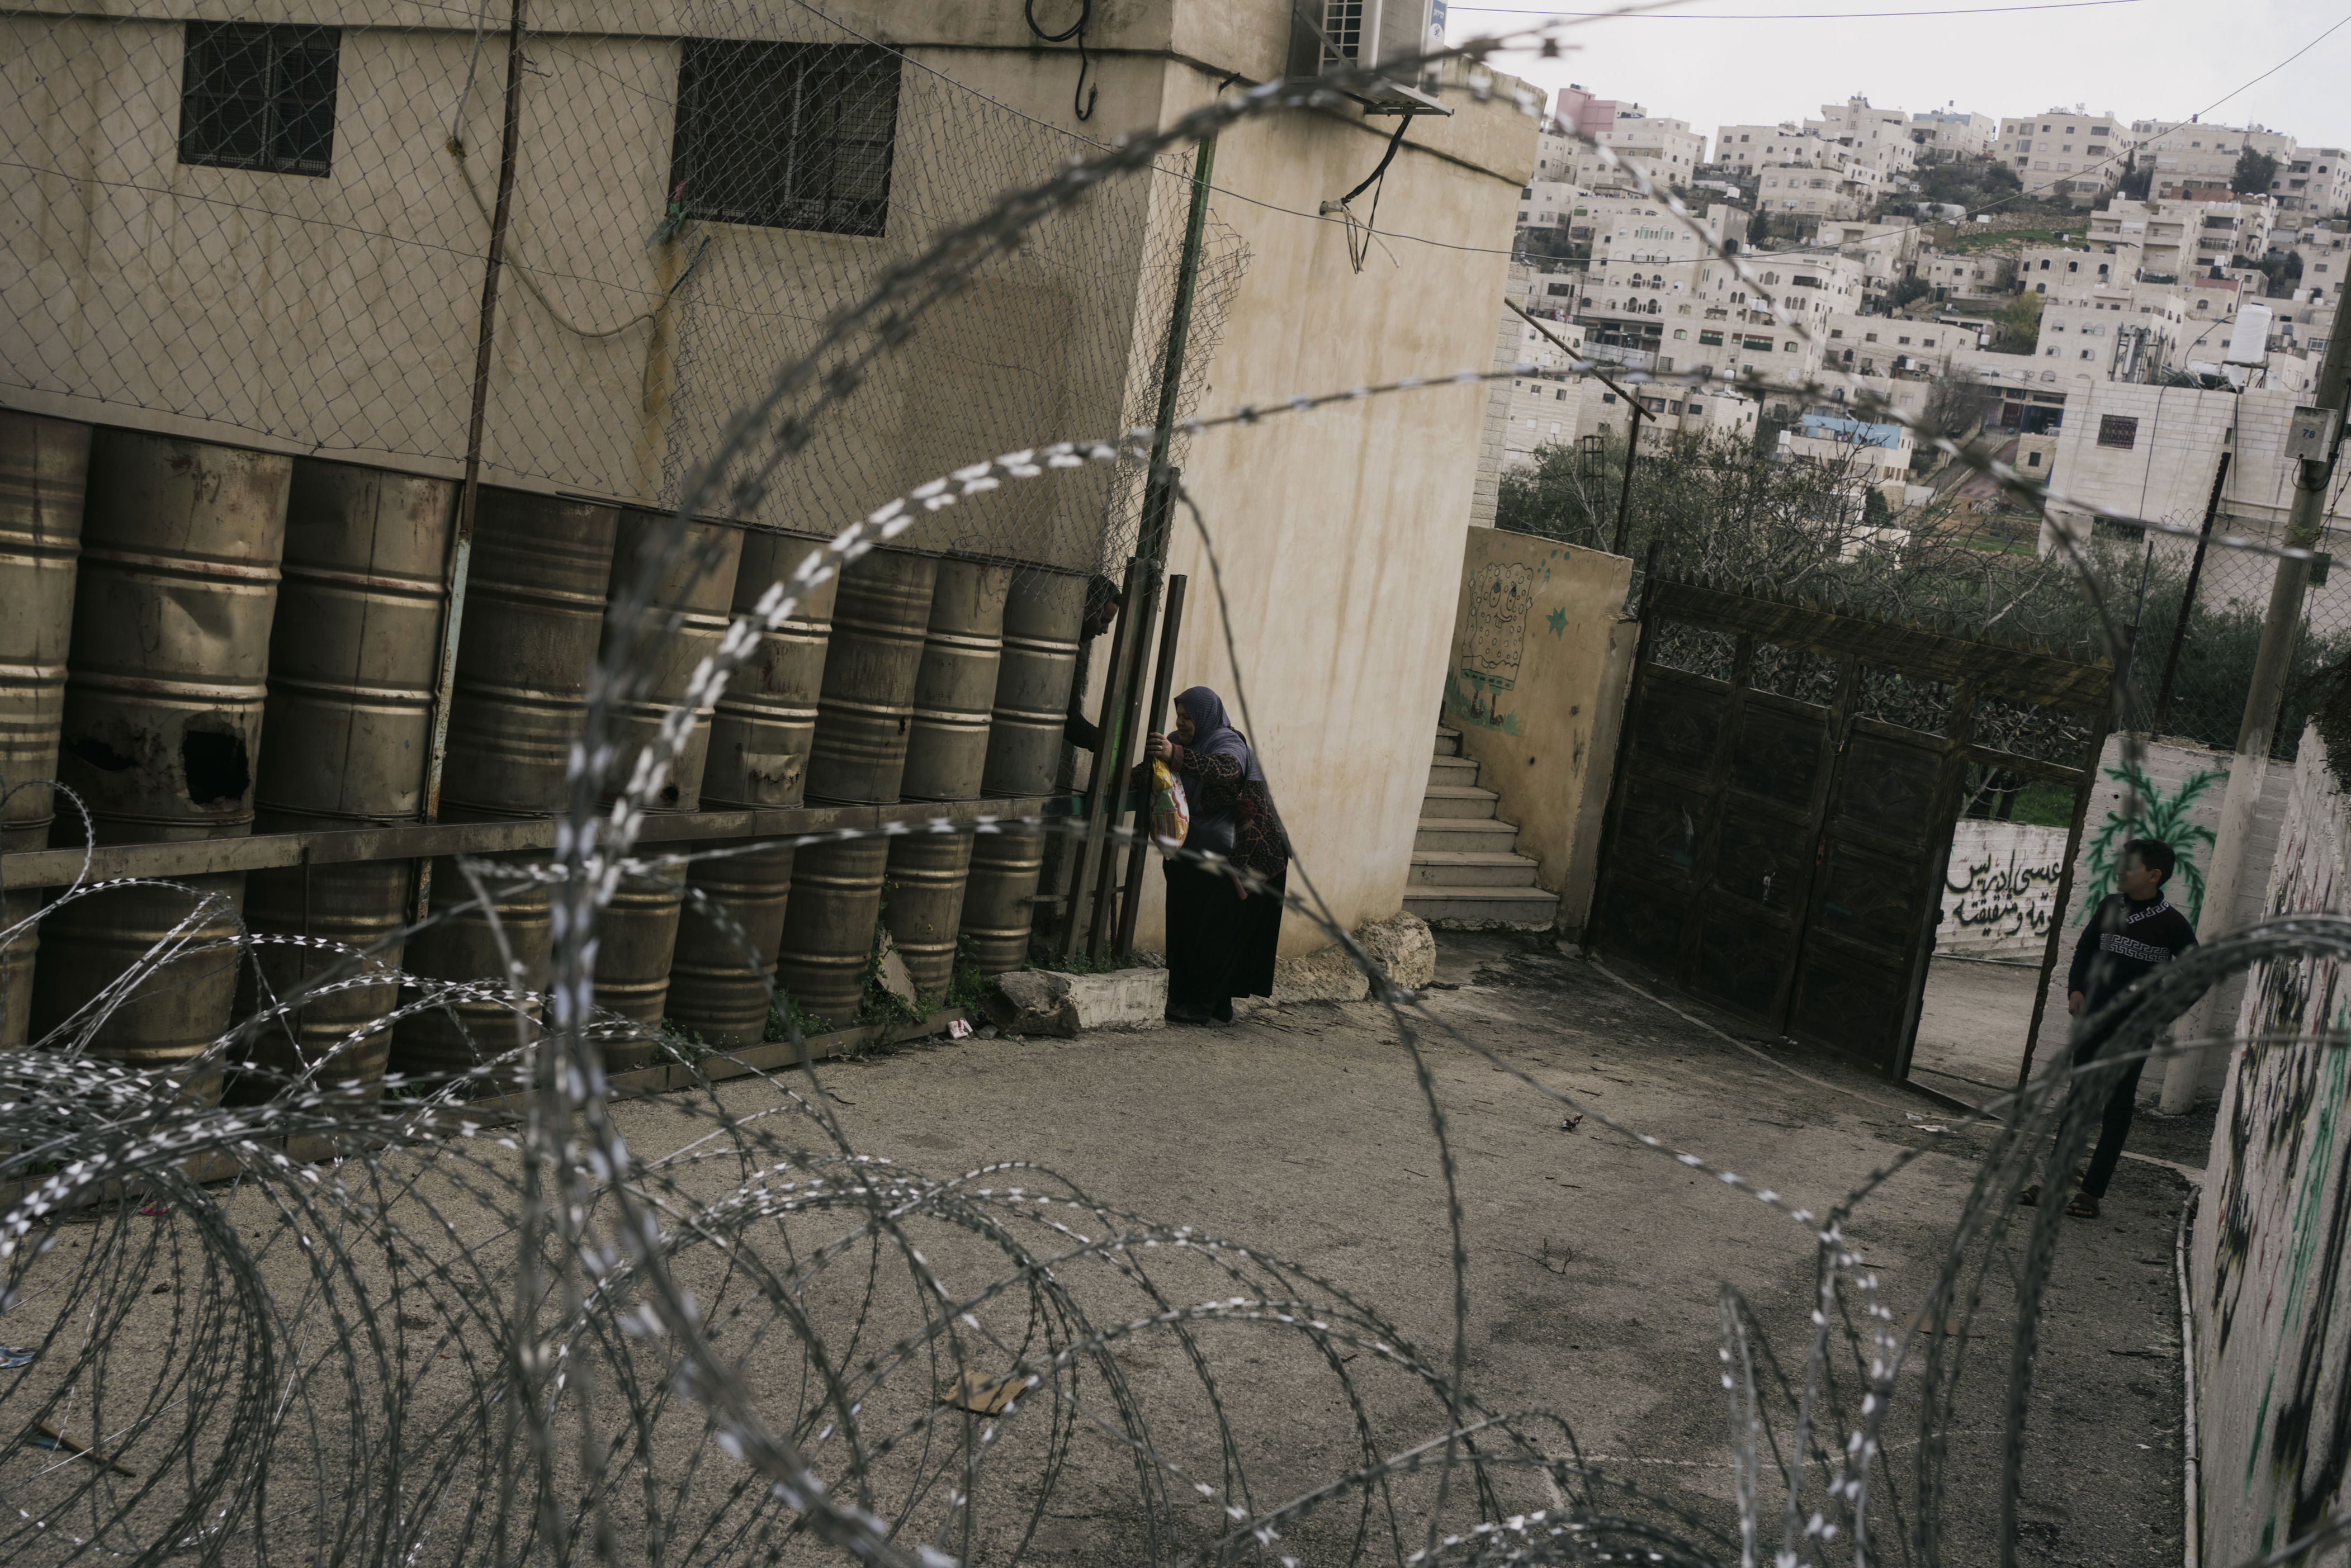 in israeli-occupied hebron, palestinians describe living in ‘a prison’